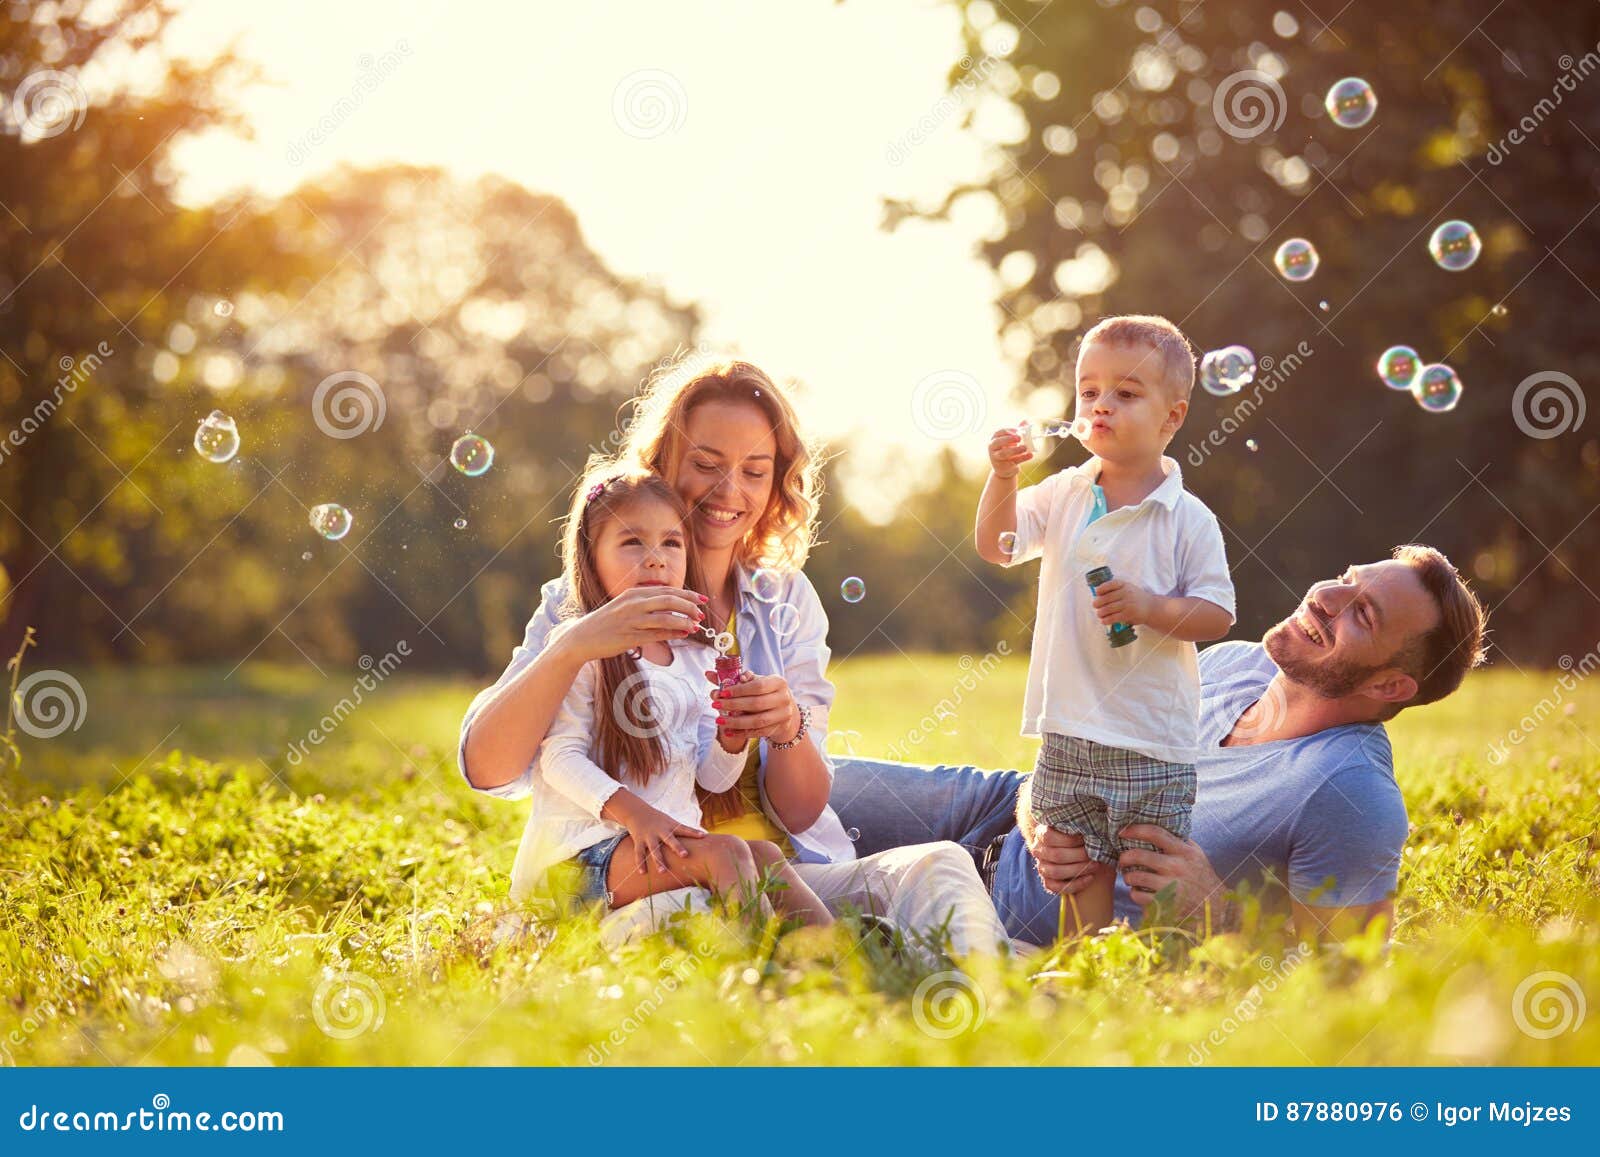 family with children blow soap bubbles